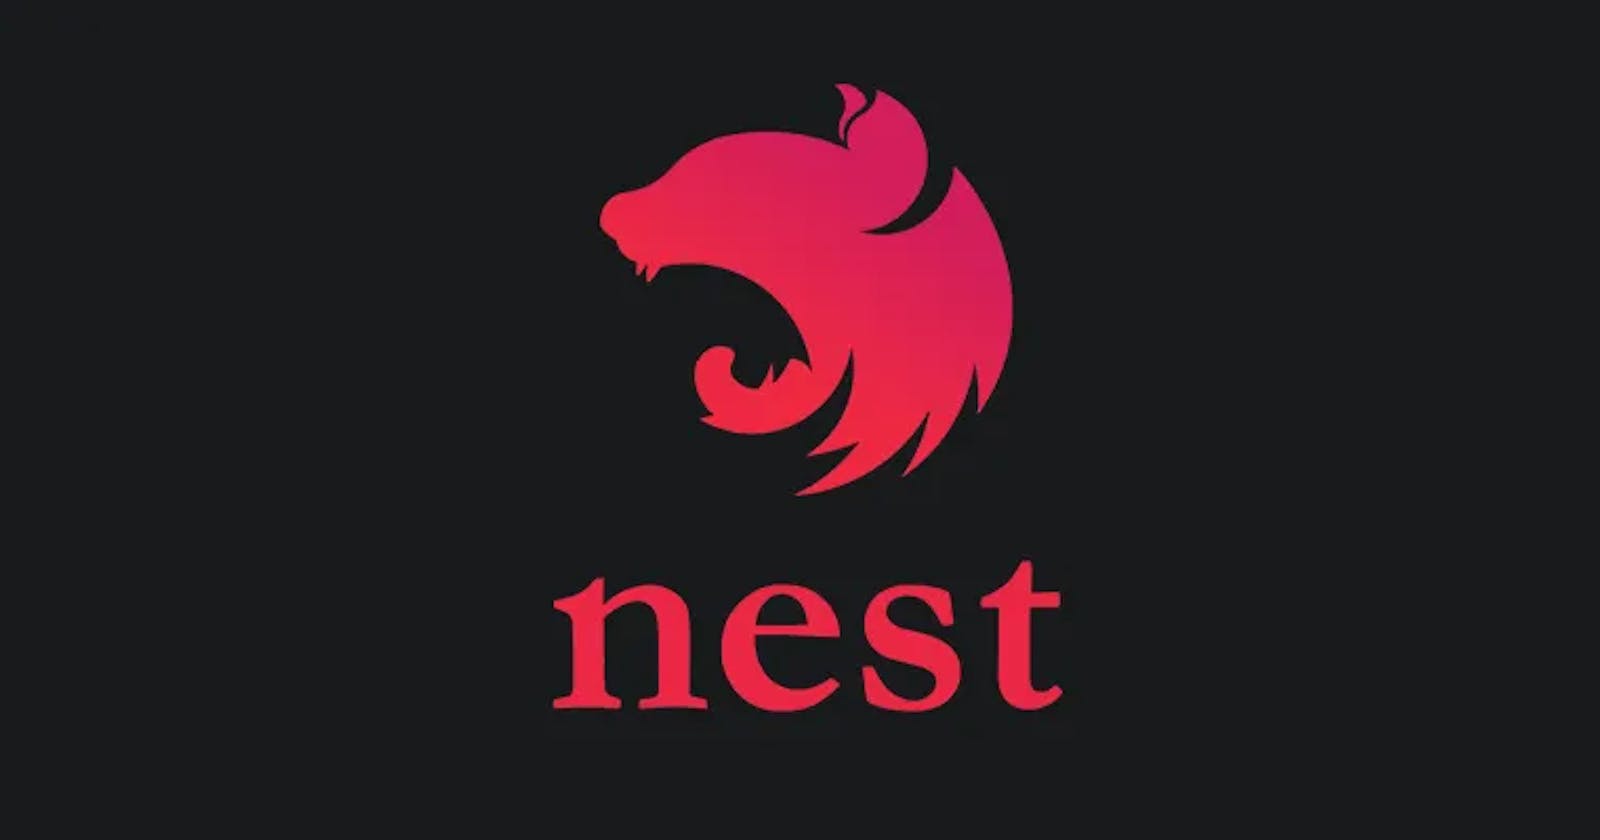 NestJS and its CRUD operations